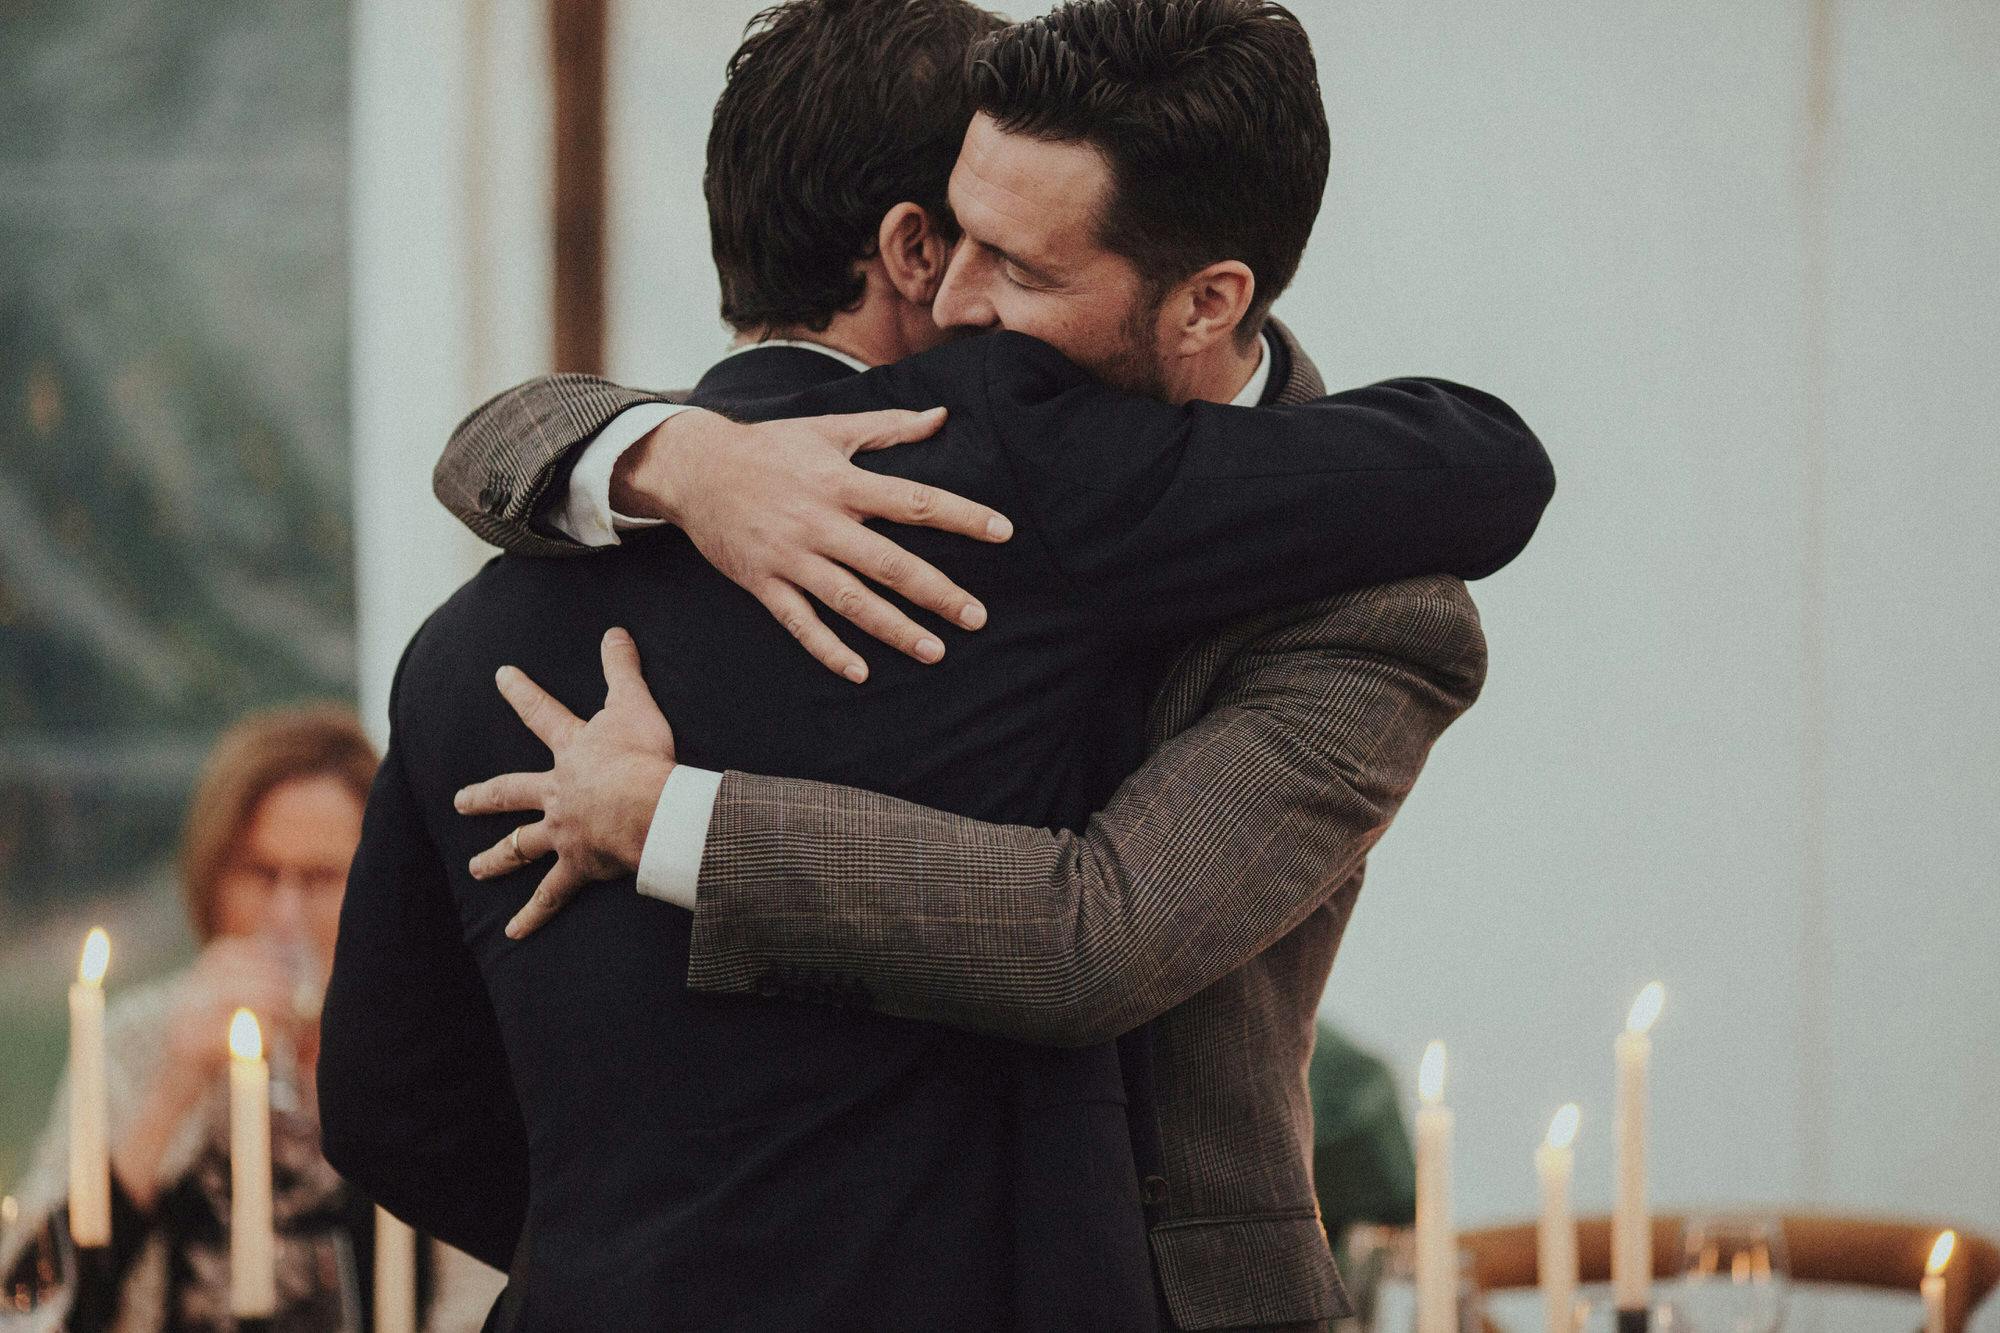 candid photos of hugs between groom and best man